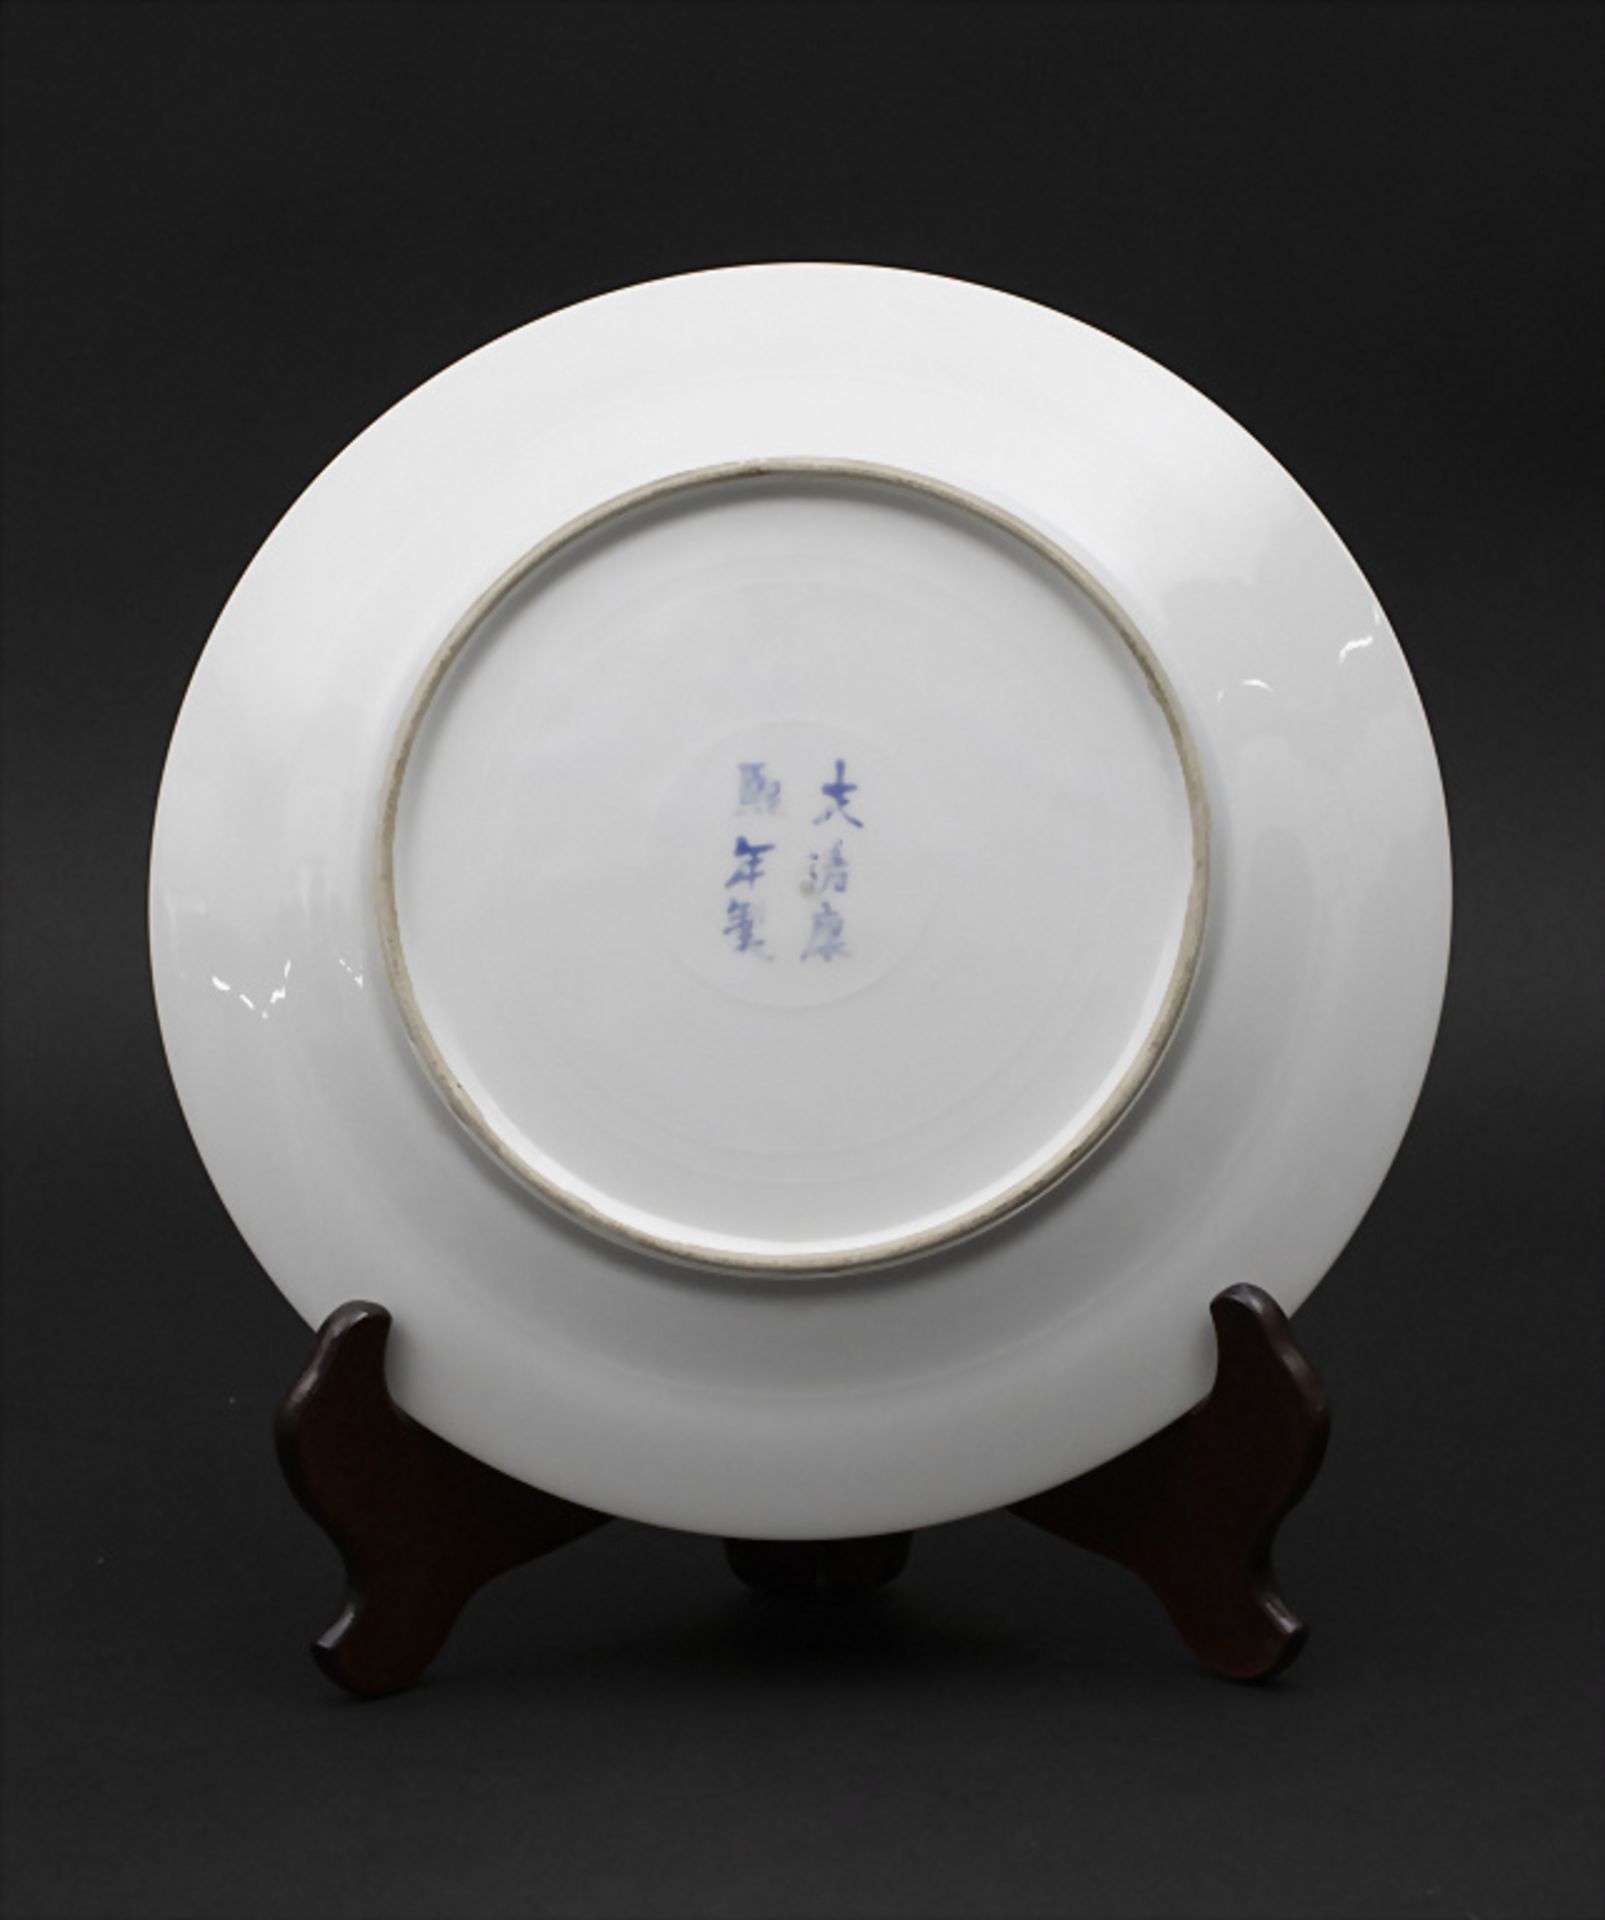 Teller / A porcelain plate, China, Qing Dynastie (1644-1911), Ende 19. Jh. - Bild 2 aus 5